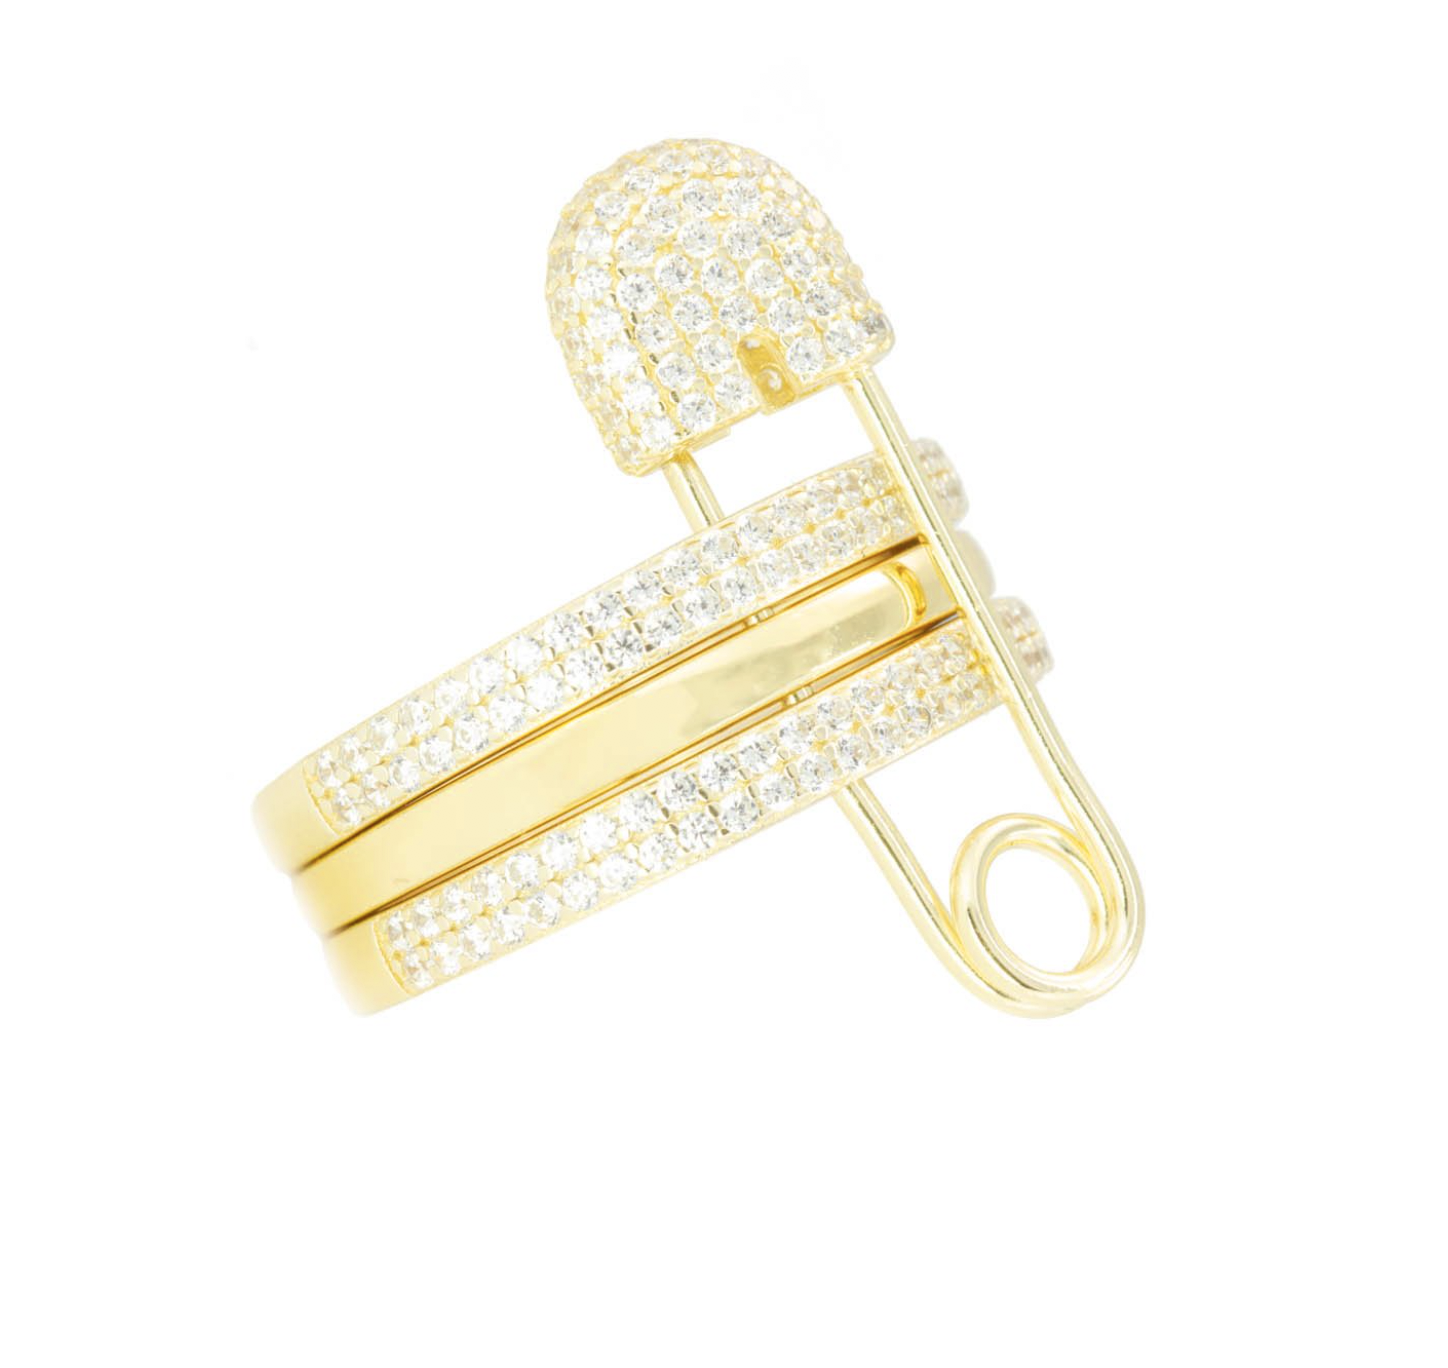 Gold Polish Silver Earrings – aham jewellery